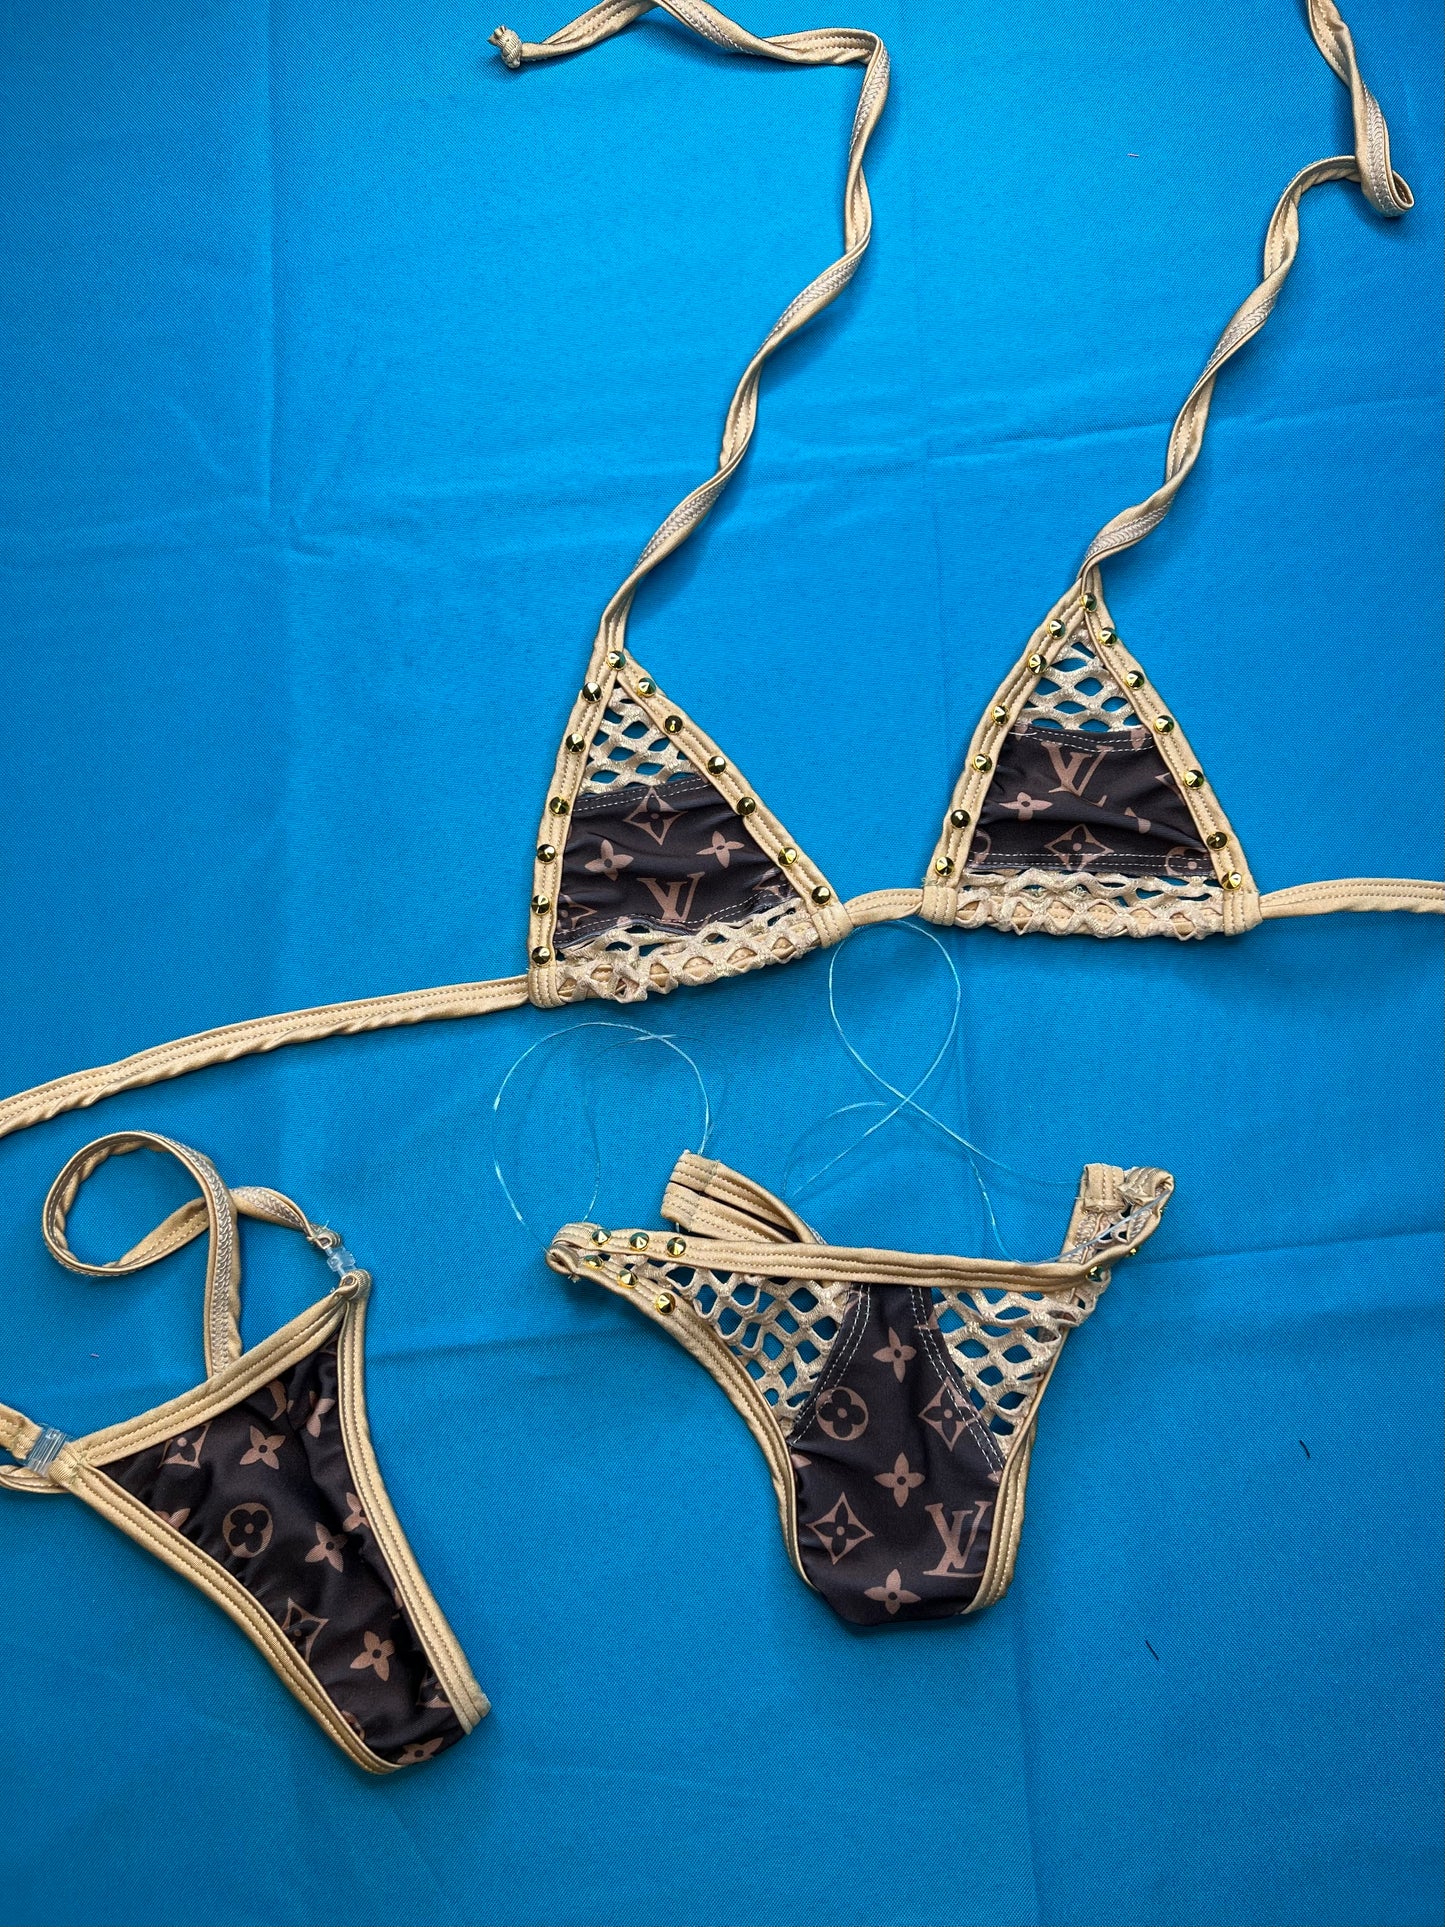 Two-Piece Gold/Brown/Fishnet Bikini Exotic Dance Wear & Stripper